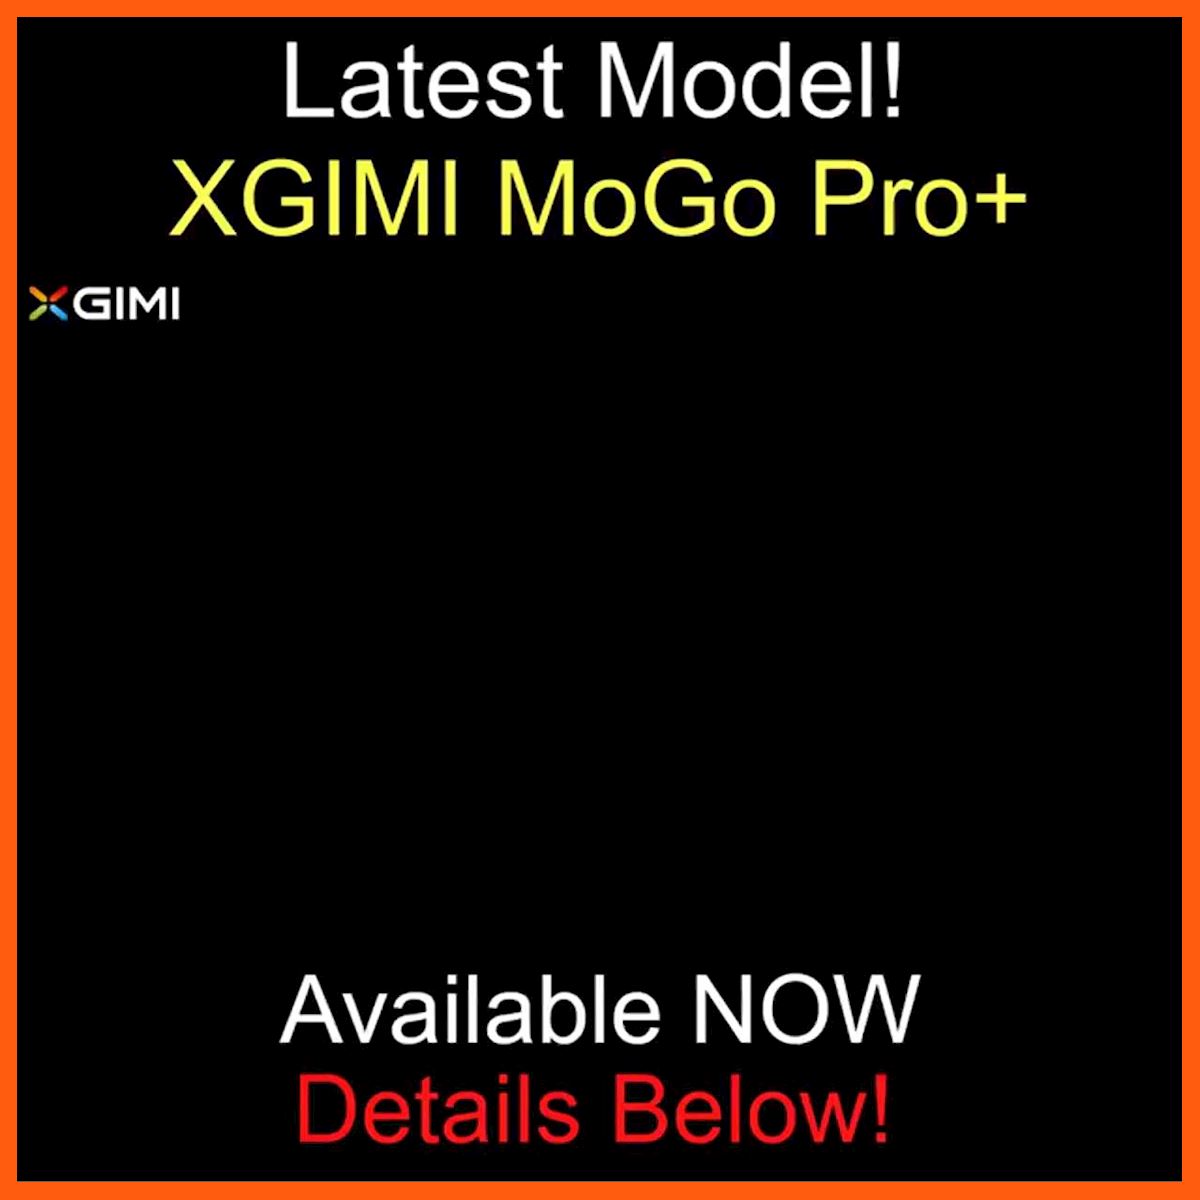 SALE Xgimi Mogo Pro Plus, Mini Projector Portable 1080P Full HD, 300 ANSI Lumen, Harman/Kardon Speakers, Android TV 9.0 สื่อบันเทิงภายในบ้าน โปรเจคเตอร์ และอุปกรณ์เสริม